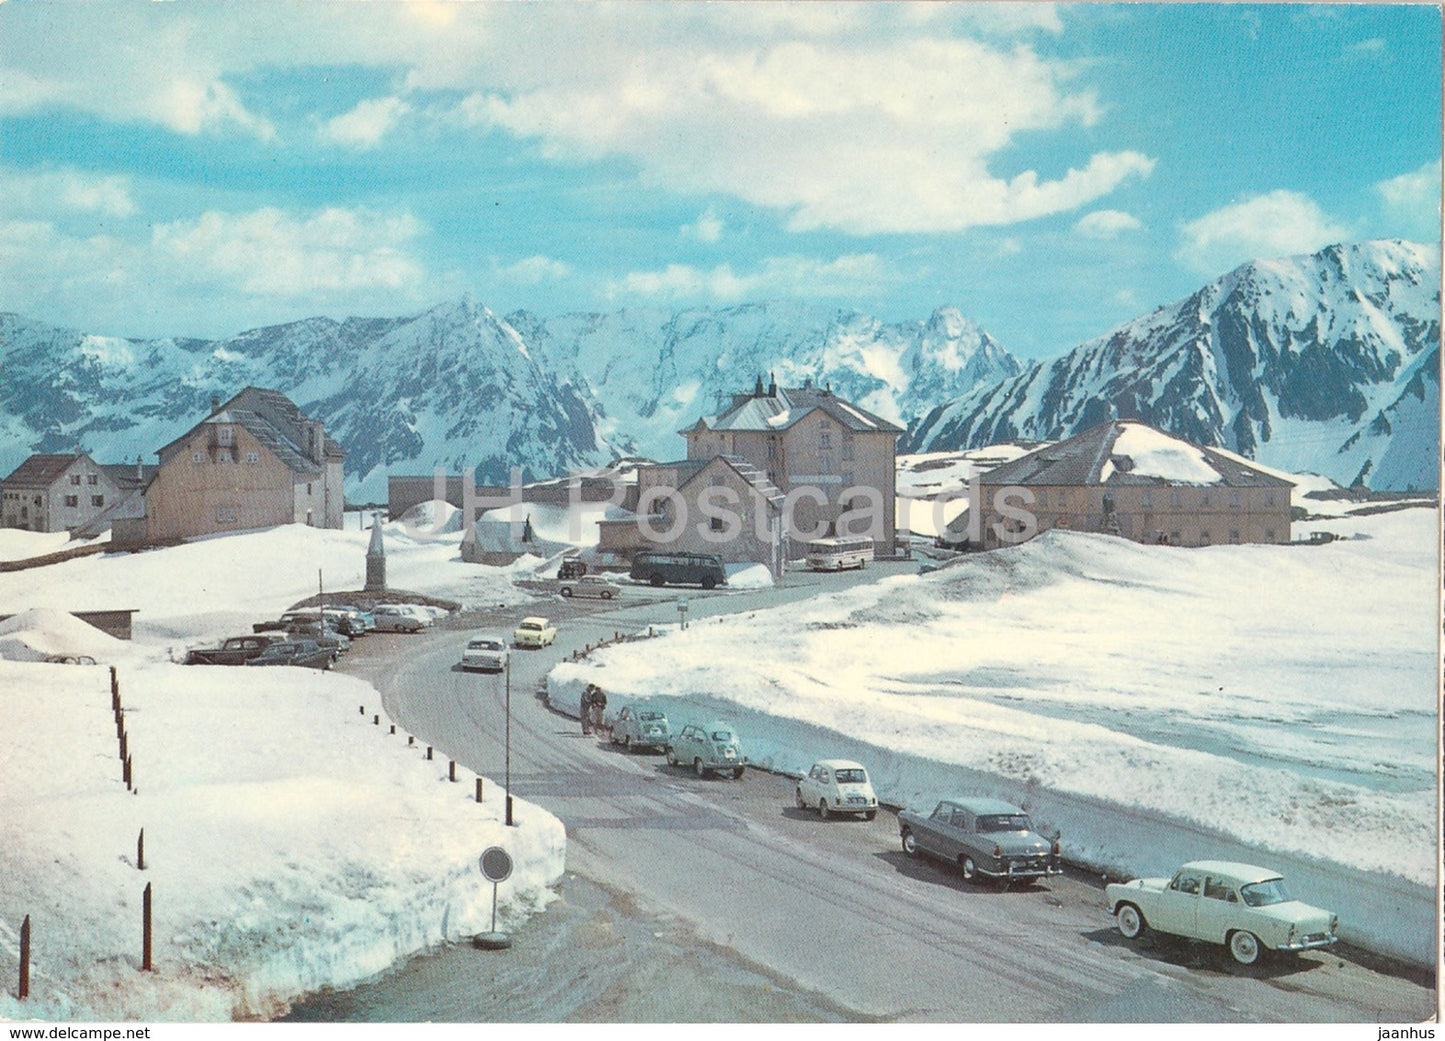 Gotthard Passhohe 2114 m - old car - Switzerland - unused - JH Postcards